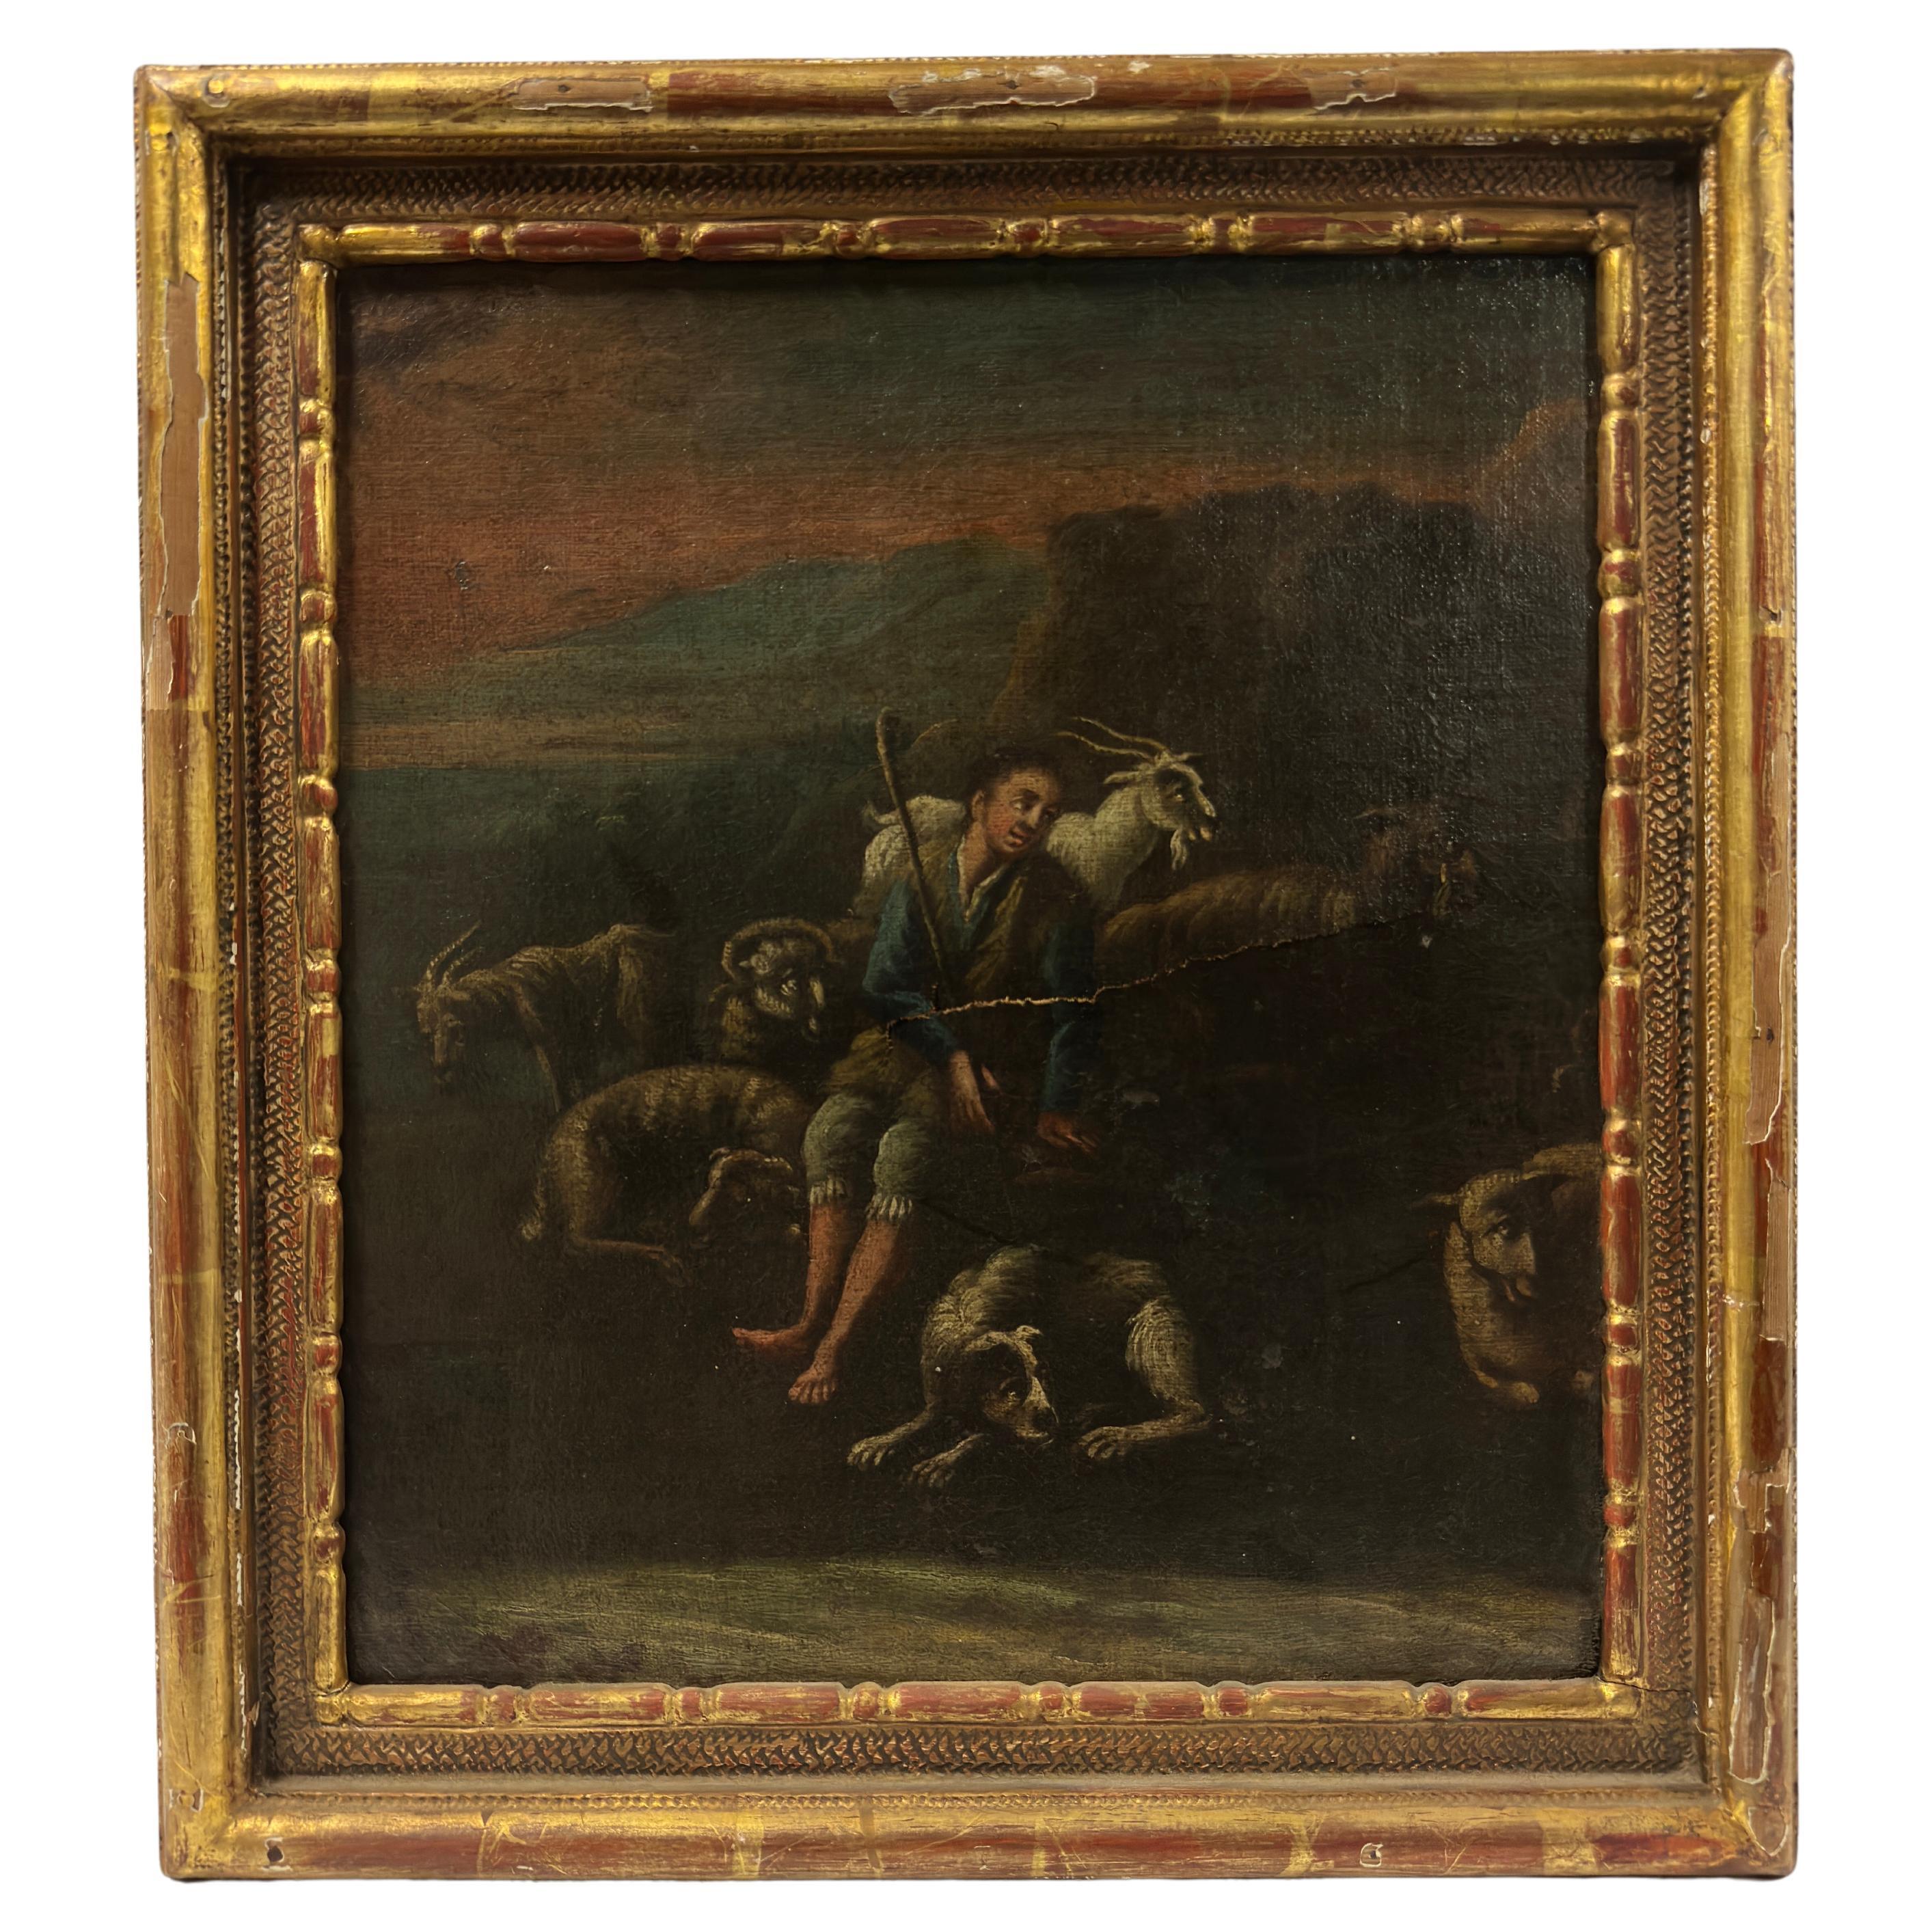 Peinture anglaise du 19e siècle intitulée "The Shepherd" (Le berger)